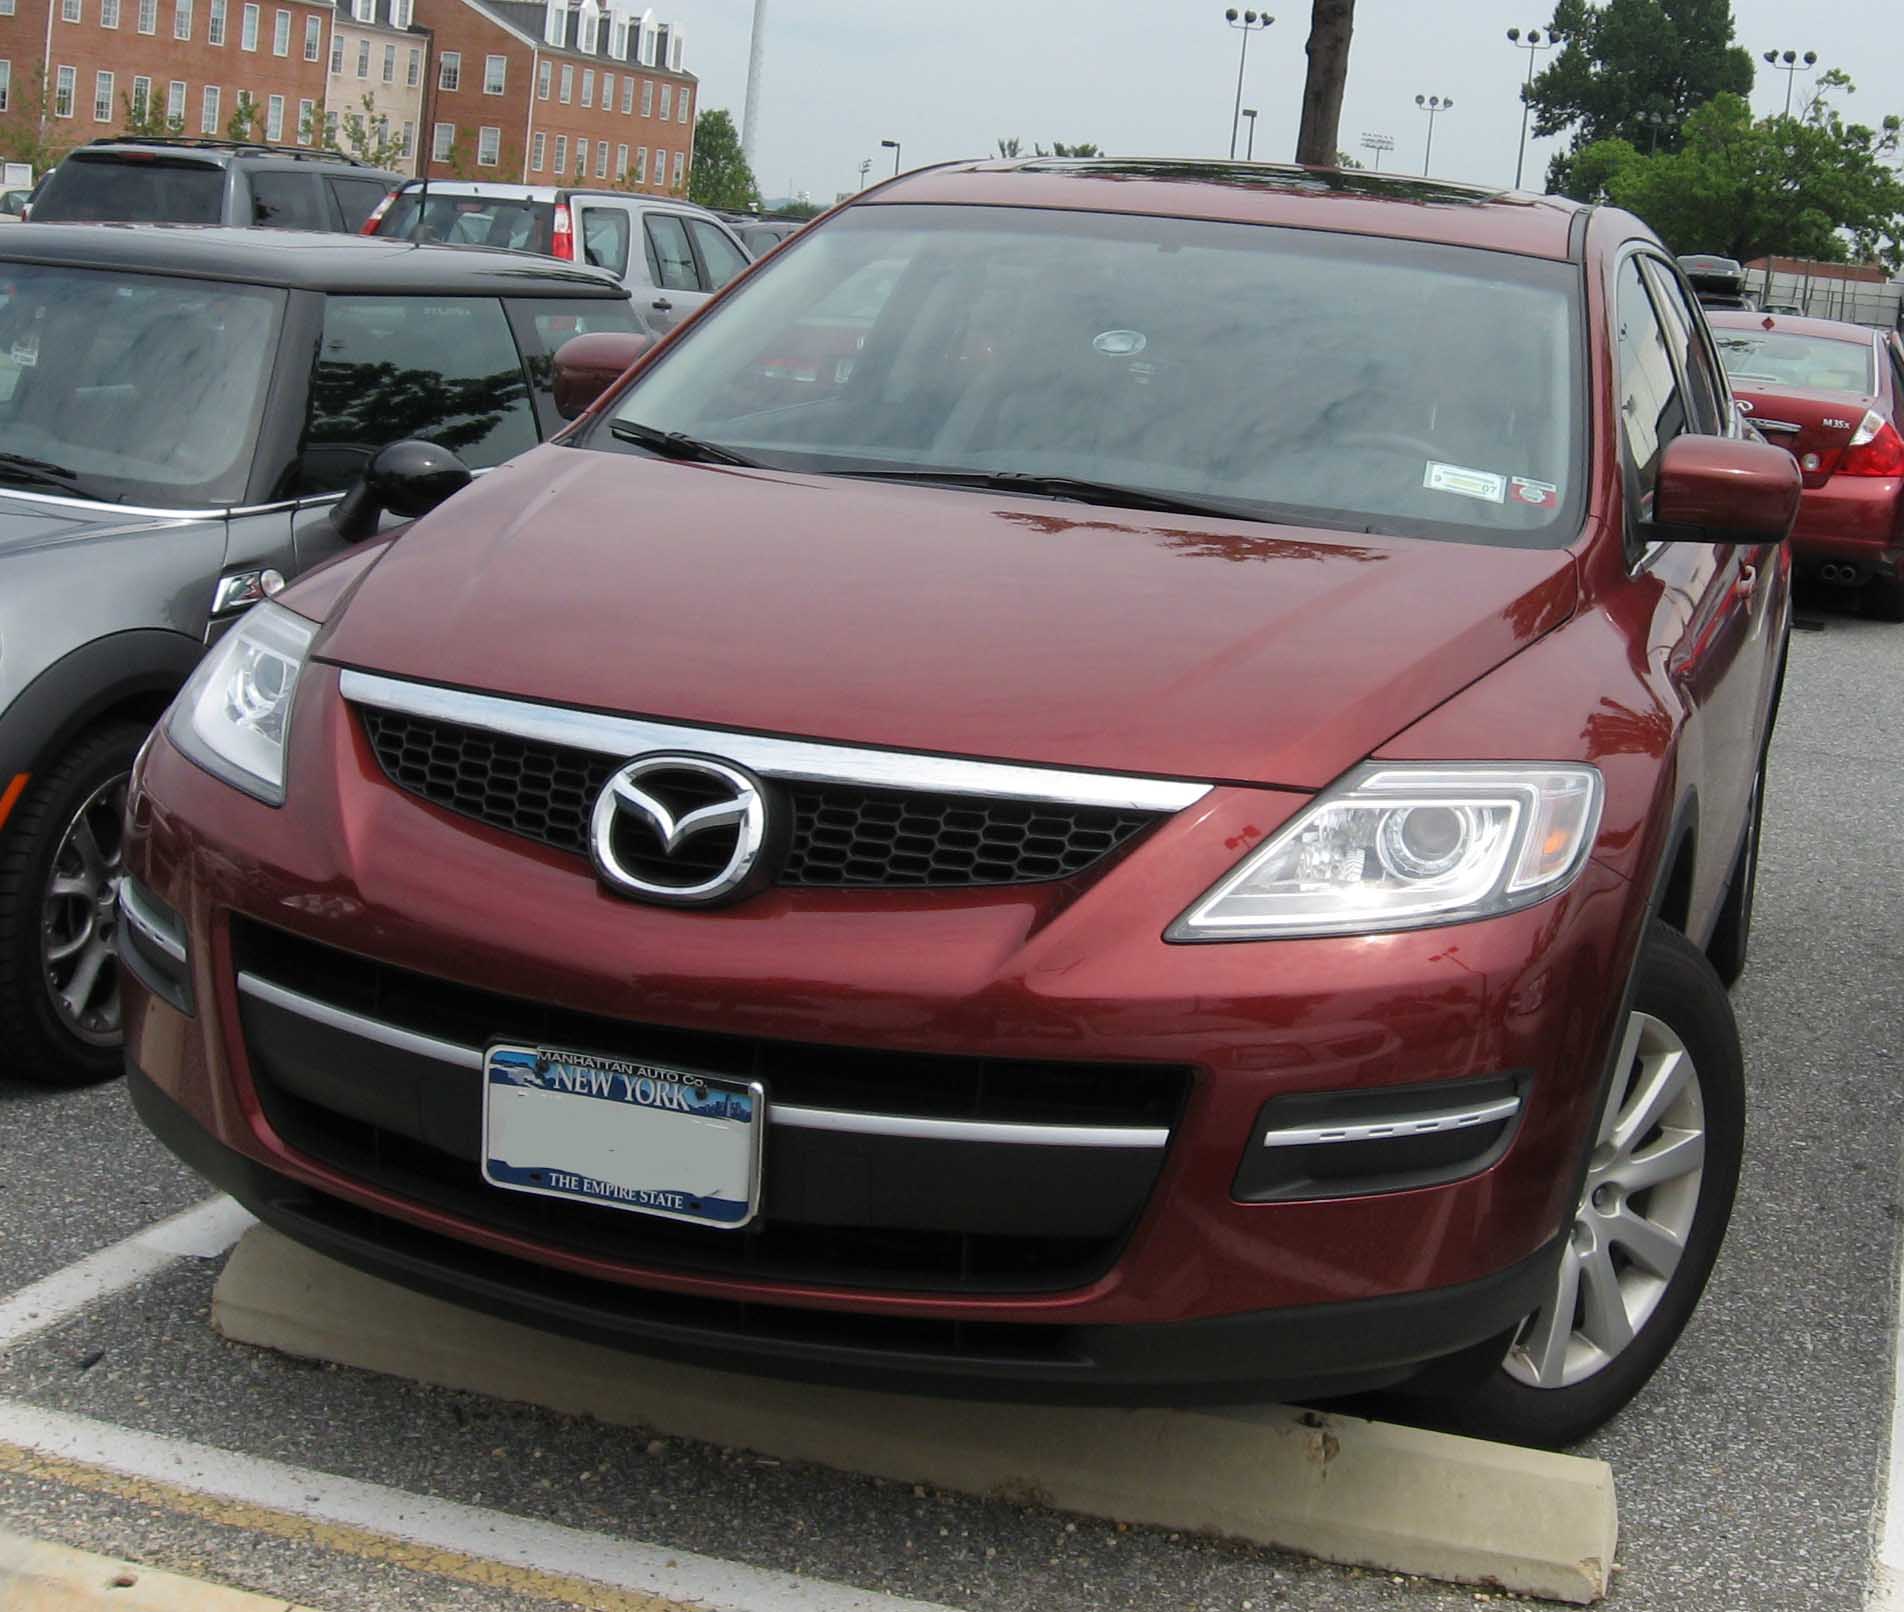 File:2007-Mazda-CX9.jpg - Wikimedia Commons